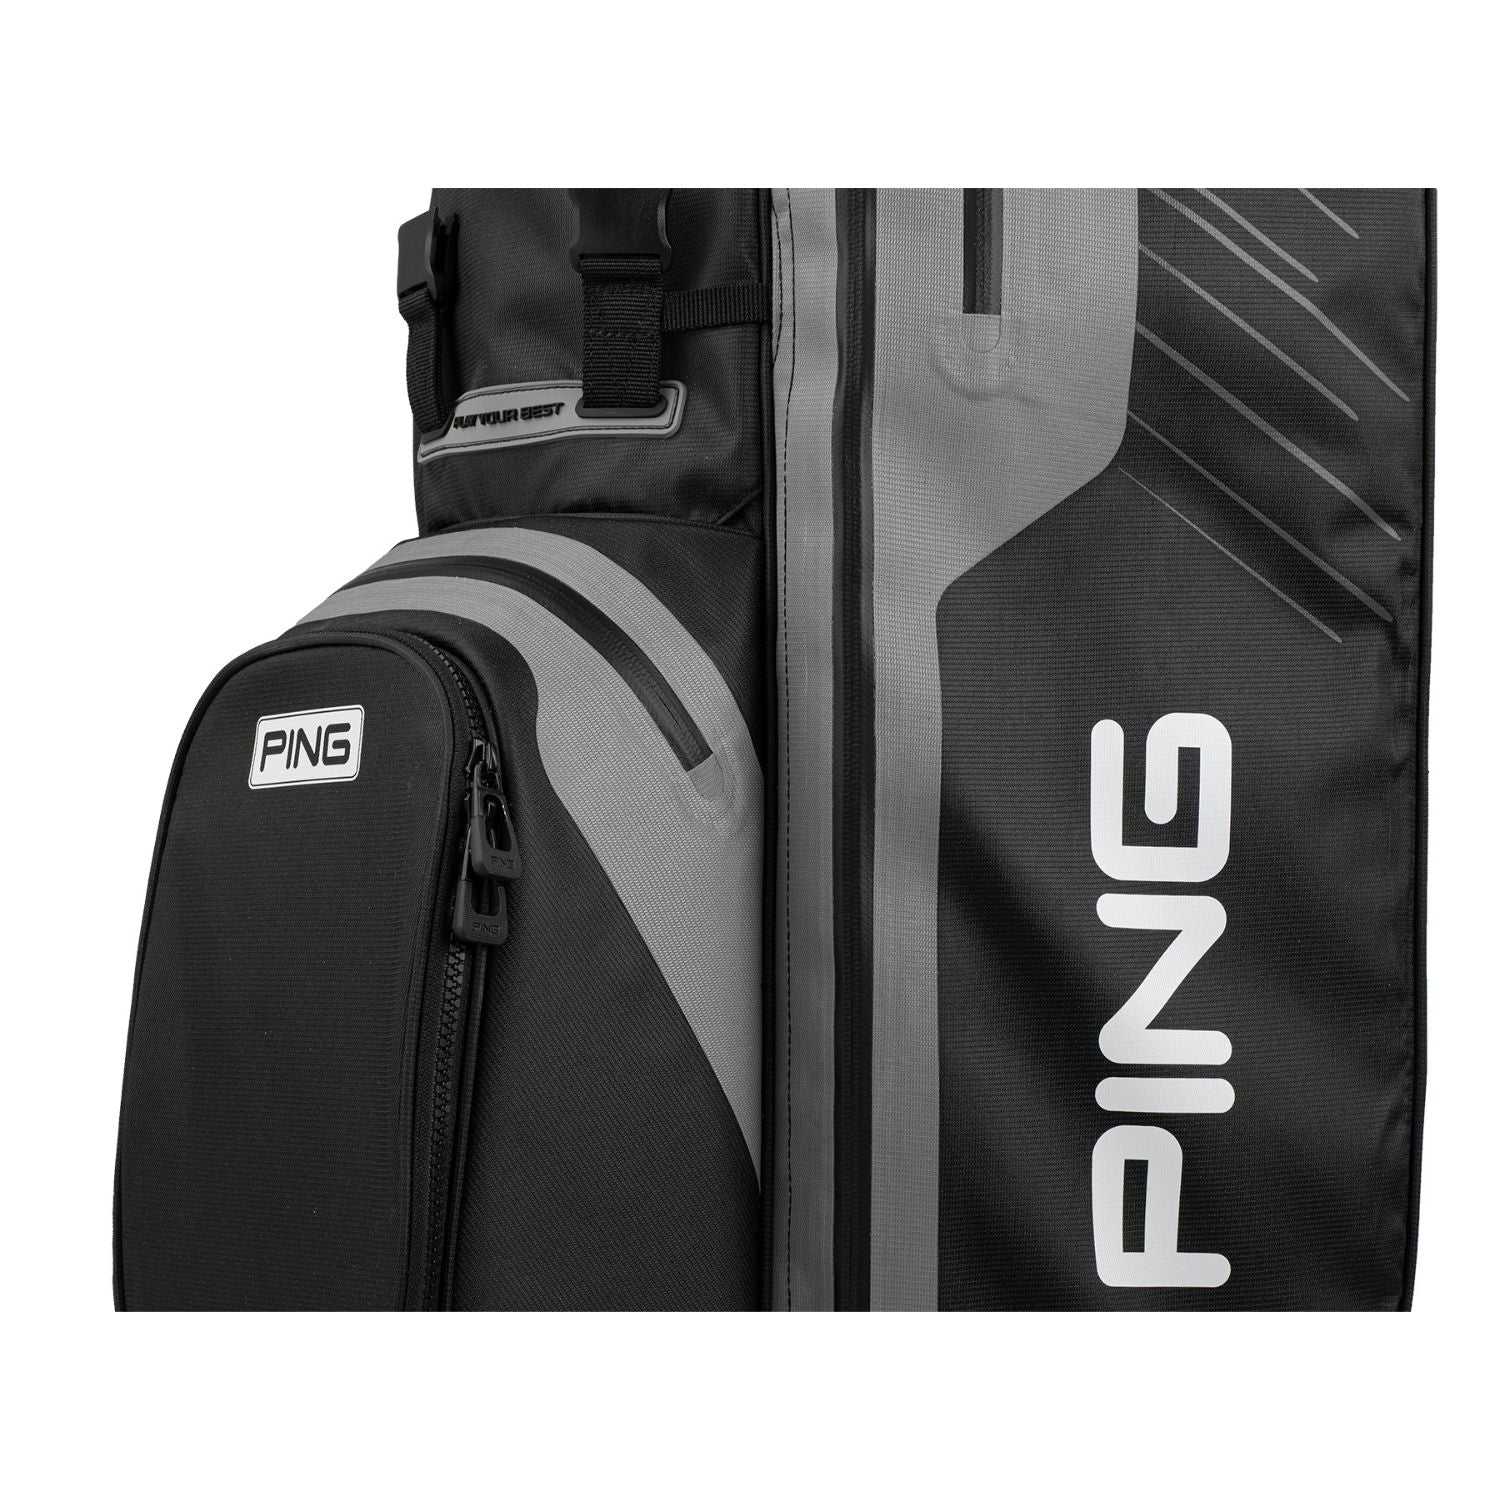 Ping Hoofer Monsoon Golf Stand Bag